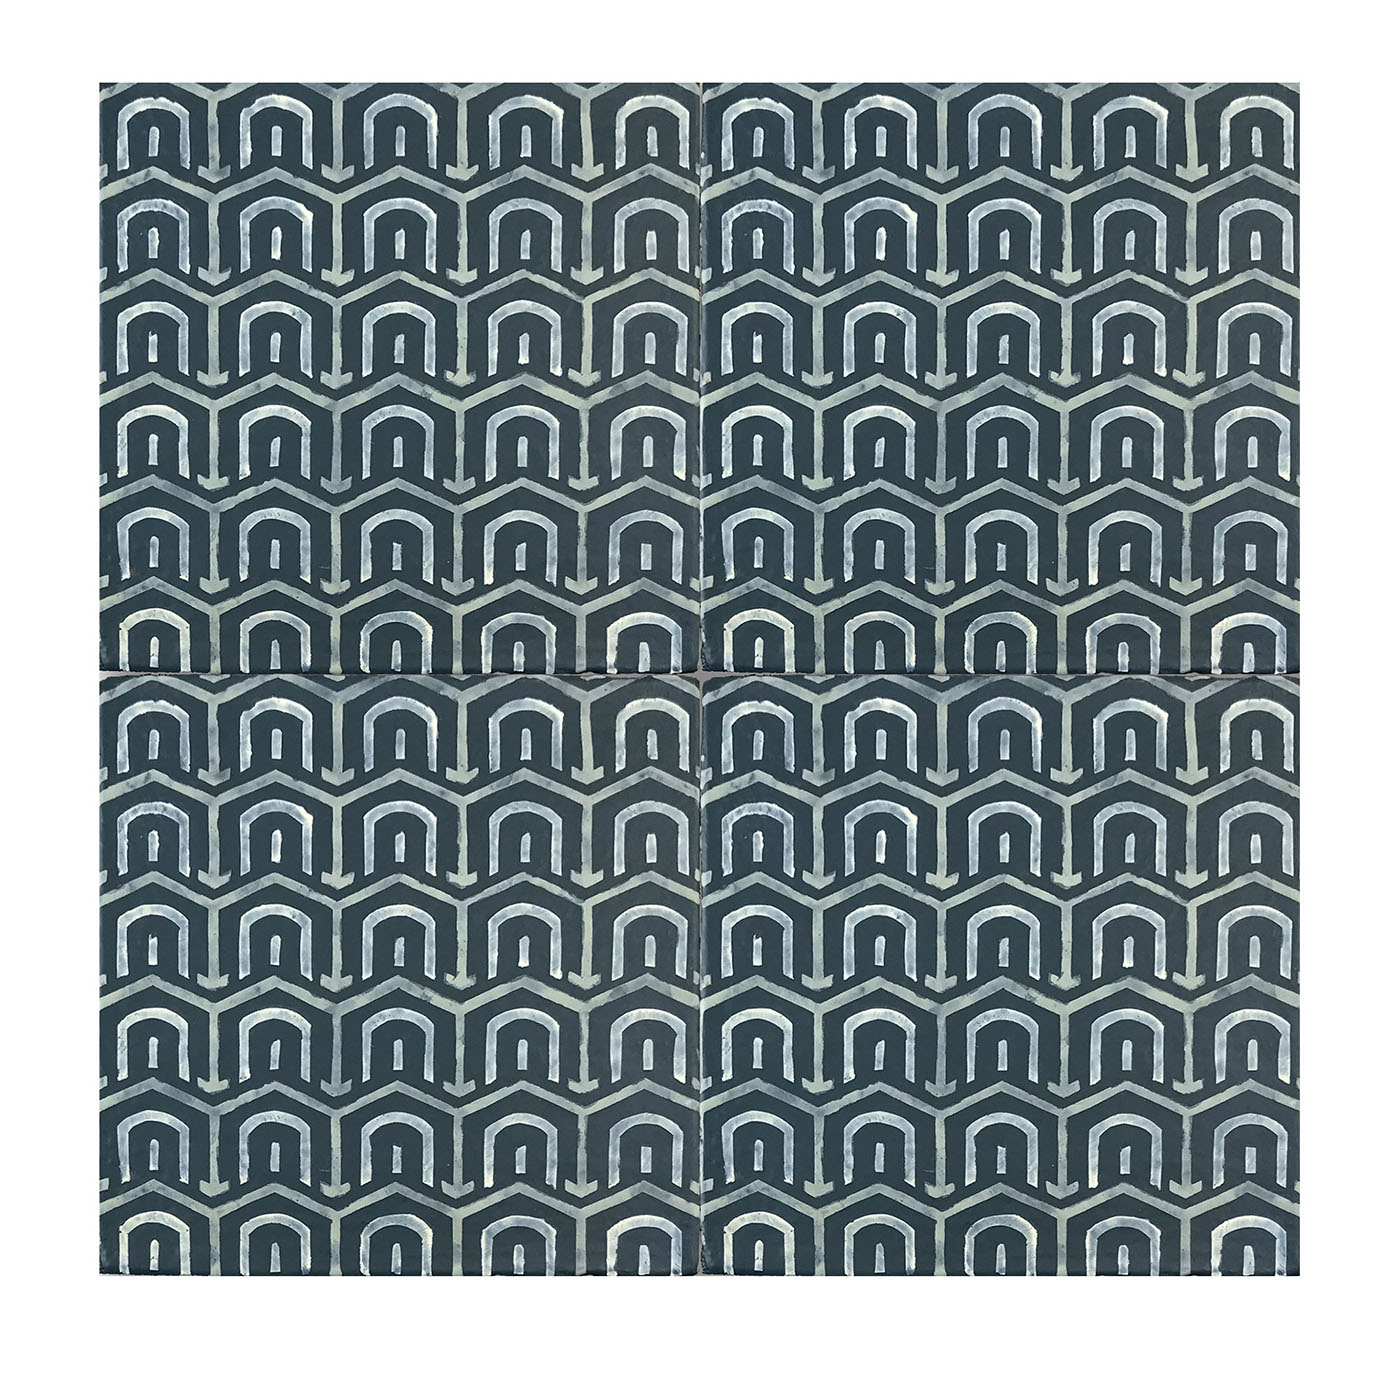 Daamè Set of 25 Square Blue Tiles #1 - Main view